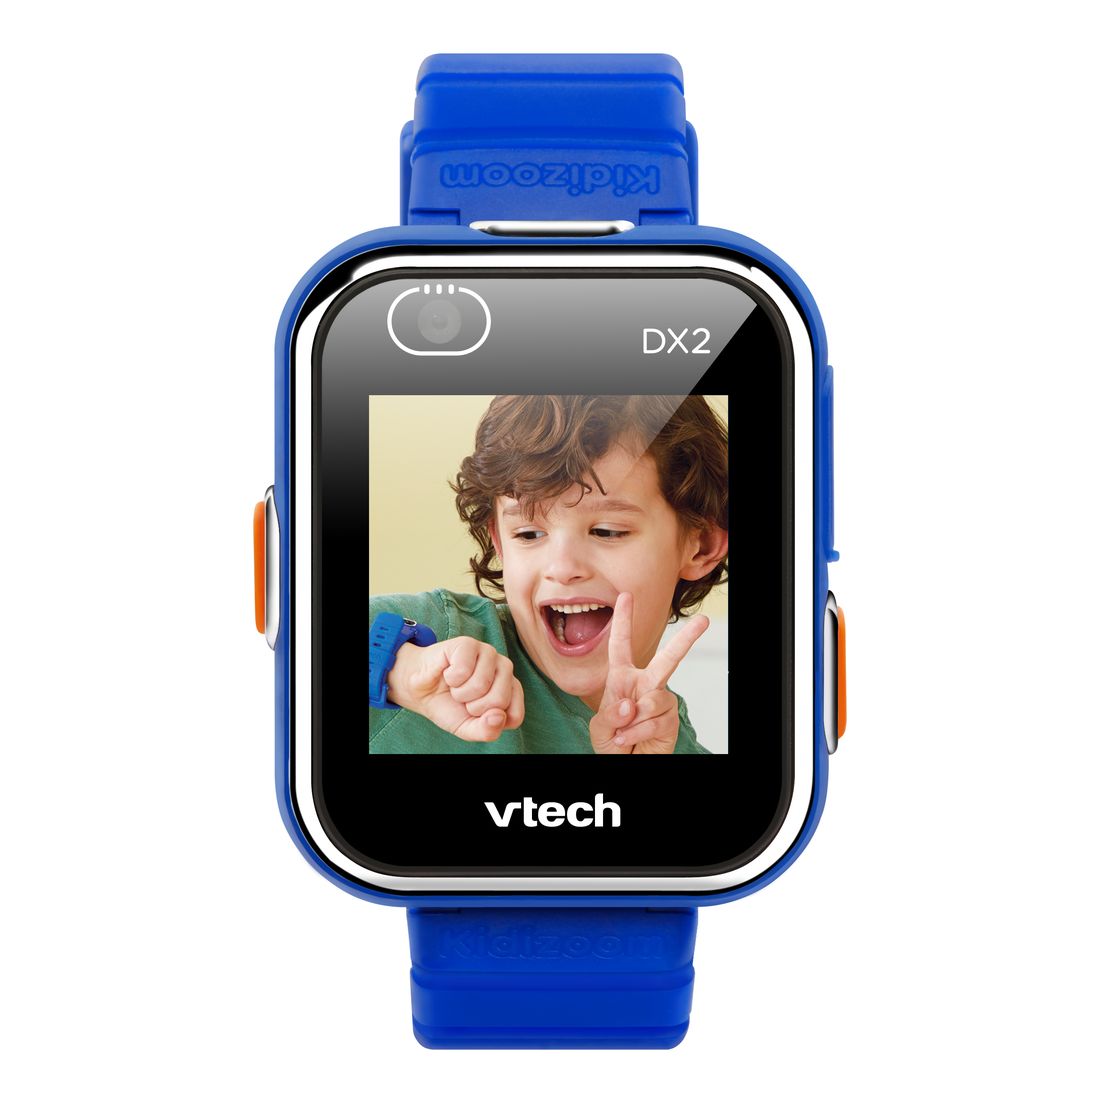 Vtech Kidizoom DX2 Kid's Smartwatch - Blue